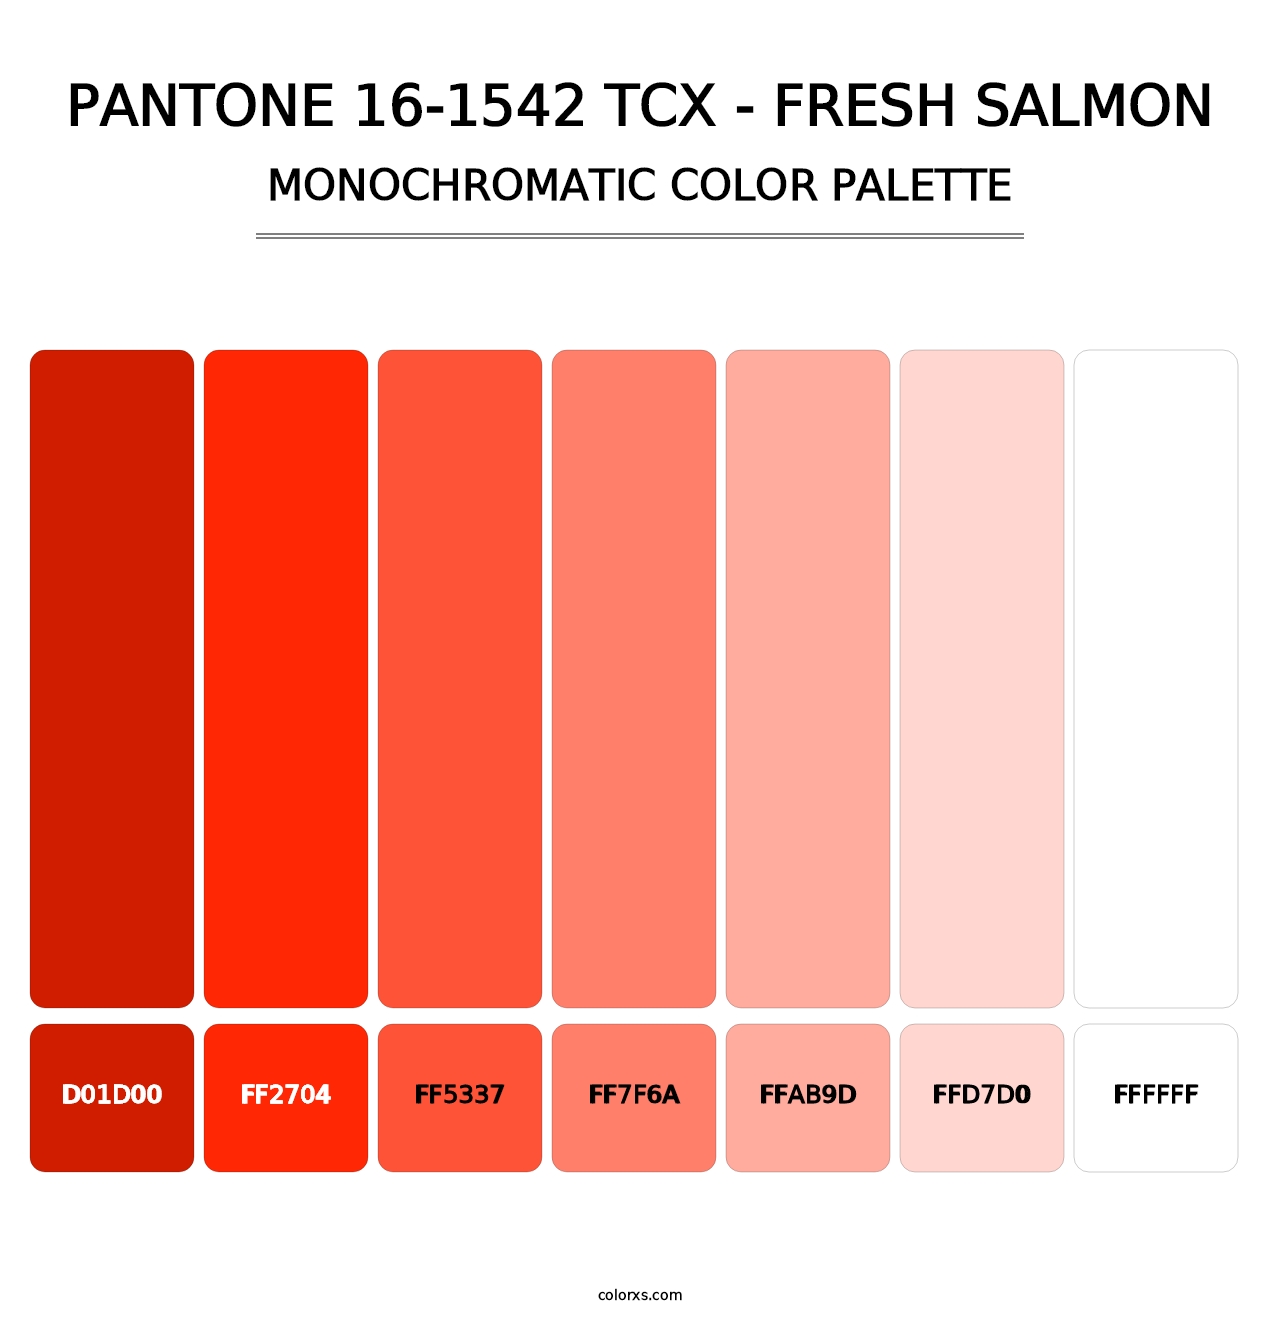 PANTONE 16-1542 TCX - Fresh Salmon - Monochromatic Color Palette